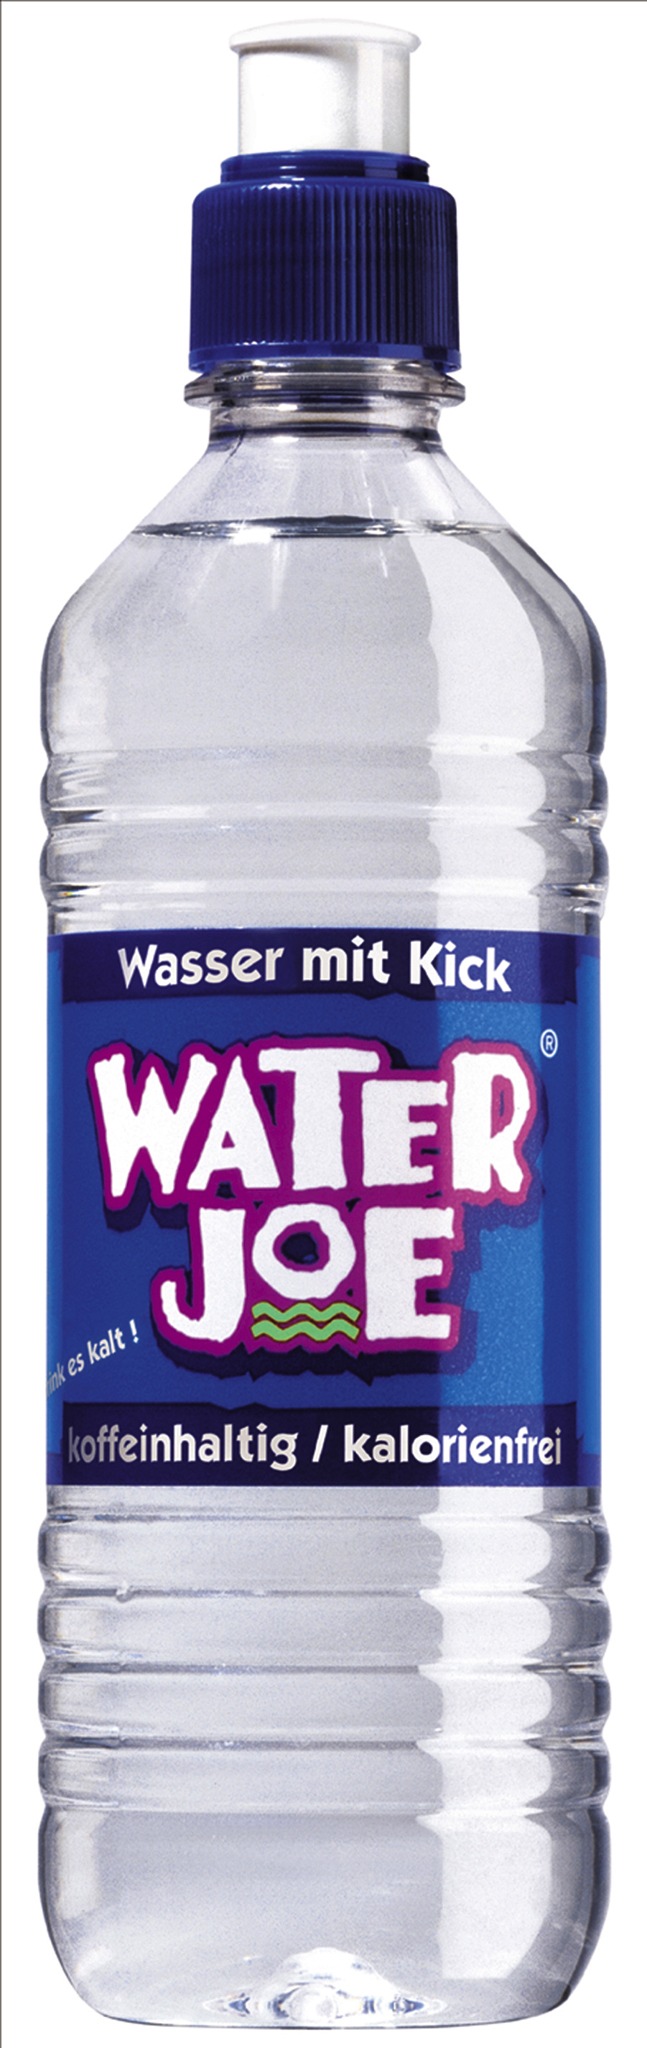 Water Joe, beliebtestes alkoholfreies Getränk in Discotheken